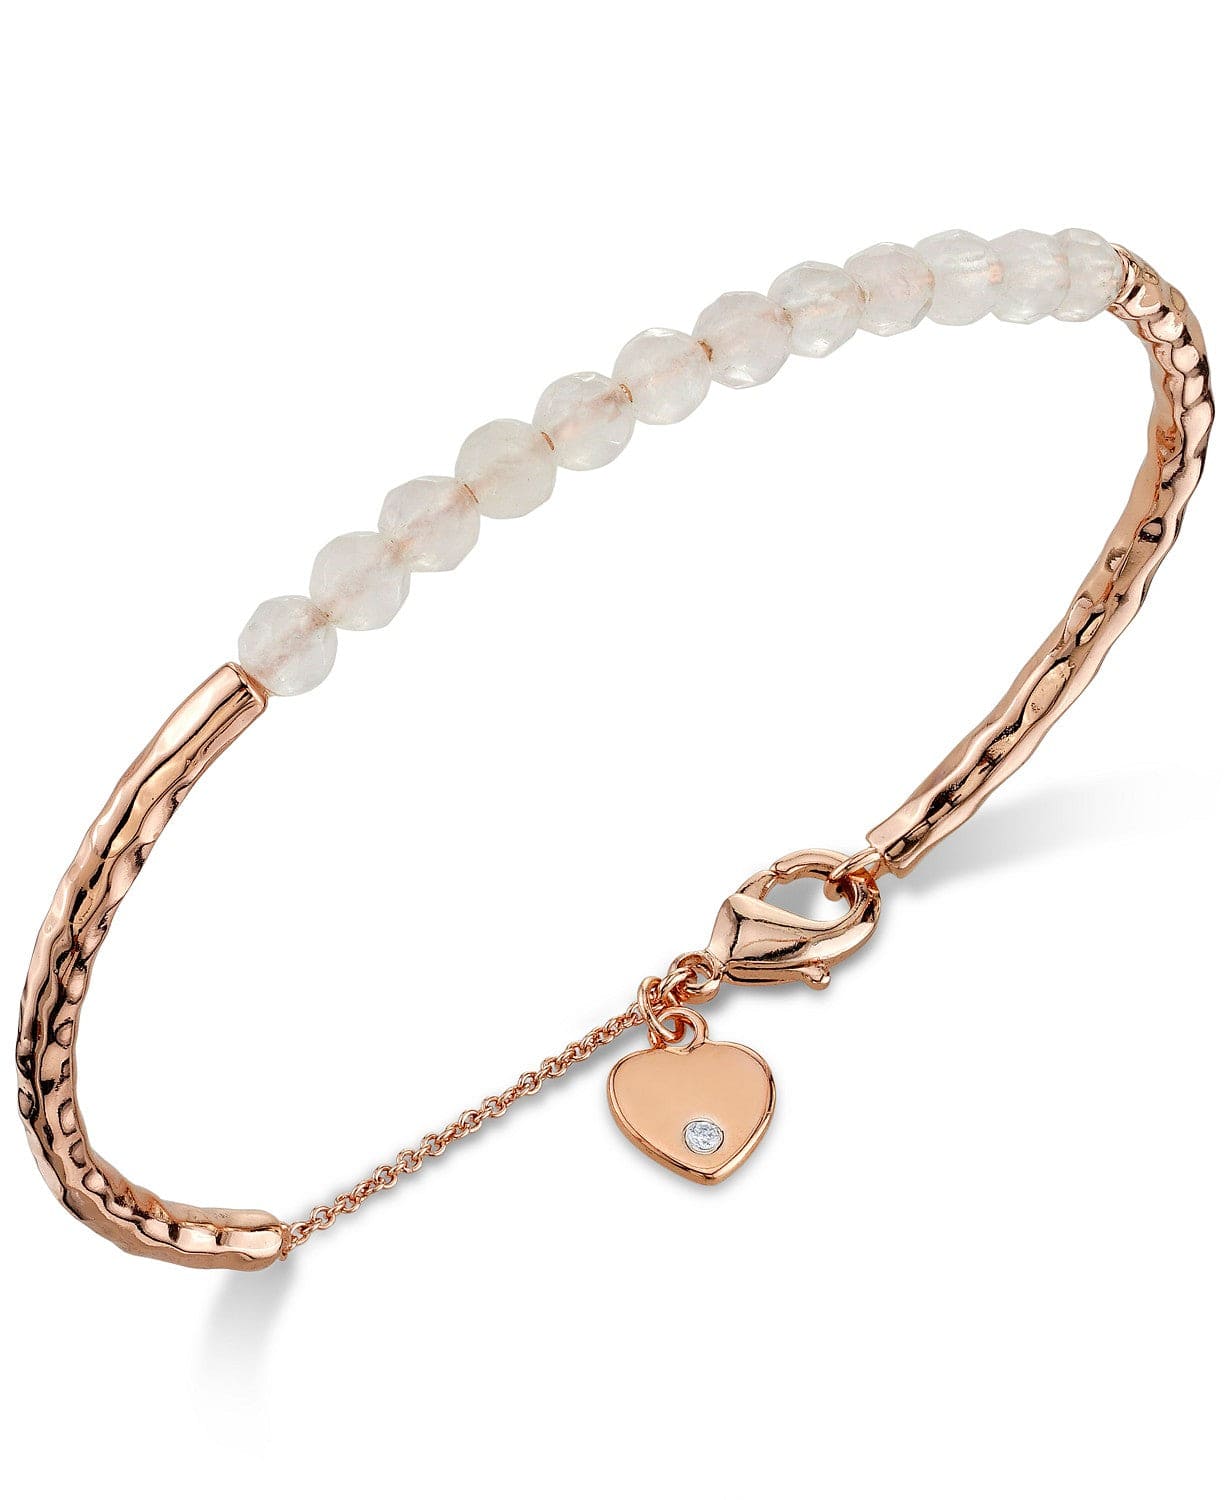 Unwritten Gemstone Bracelets Rose Quartz or Sodalite - The Pink Pigs, A Compassionate Boutique